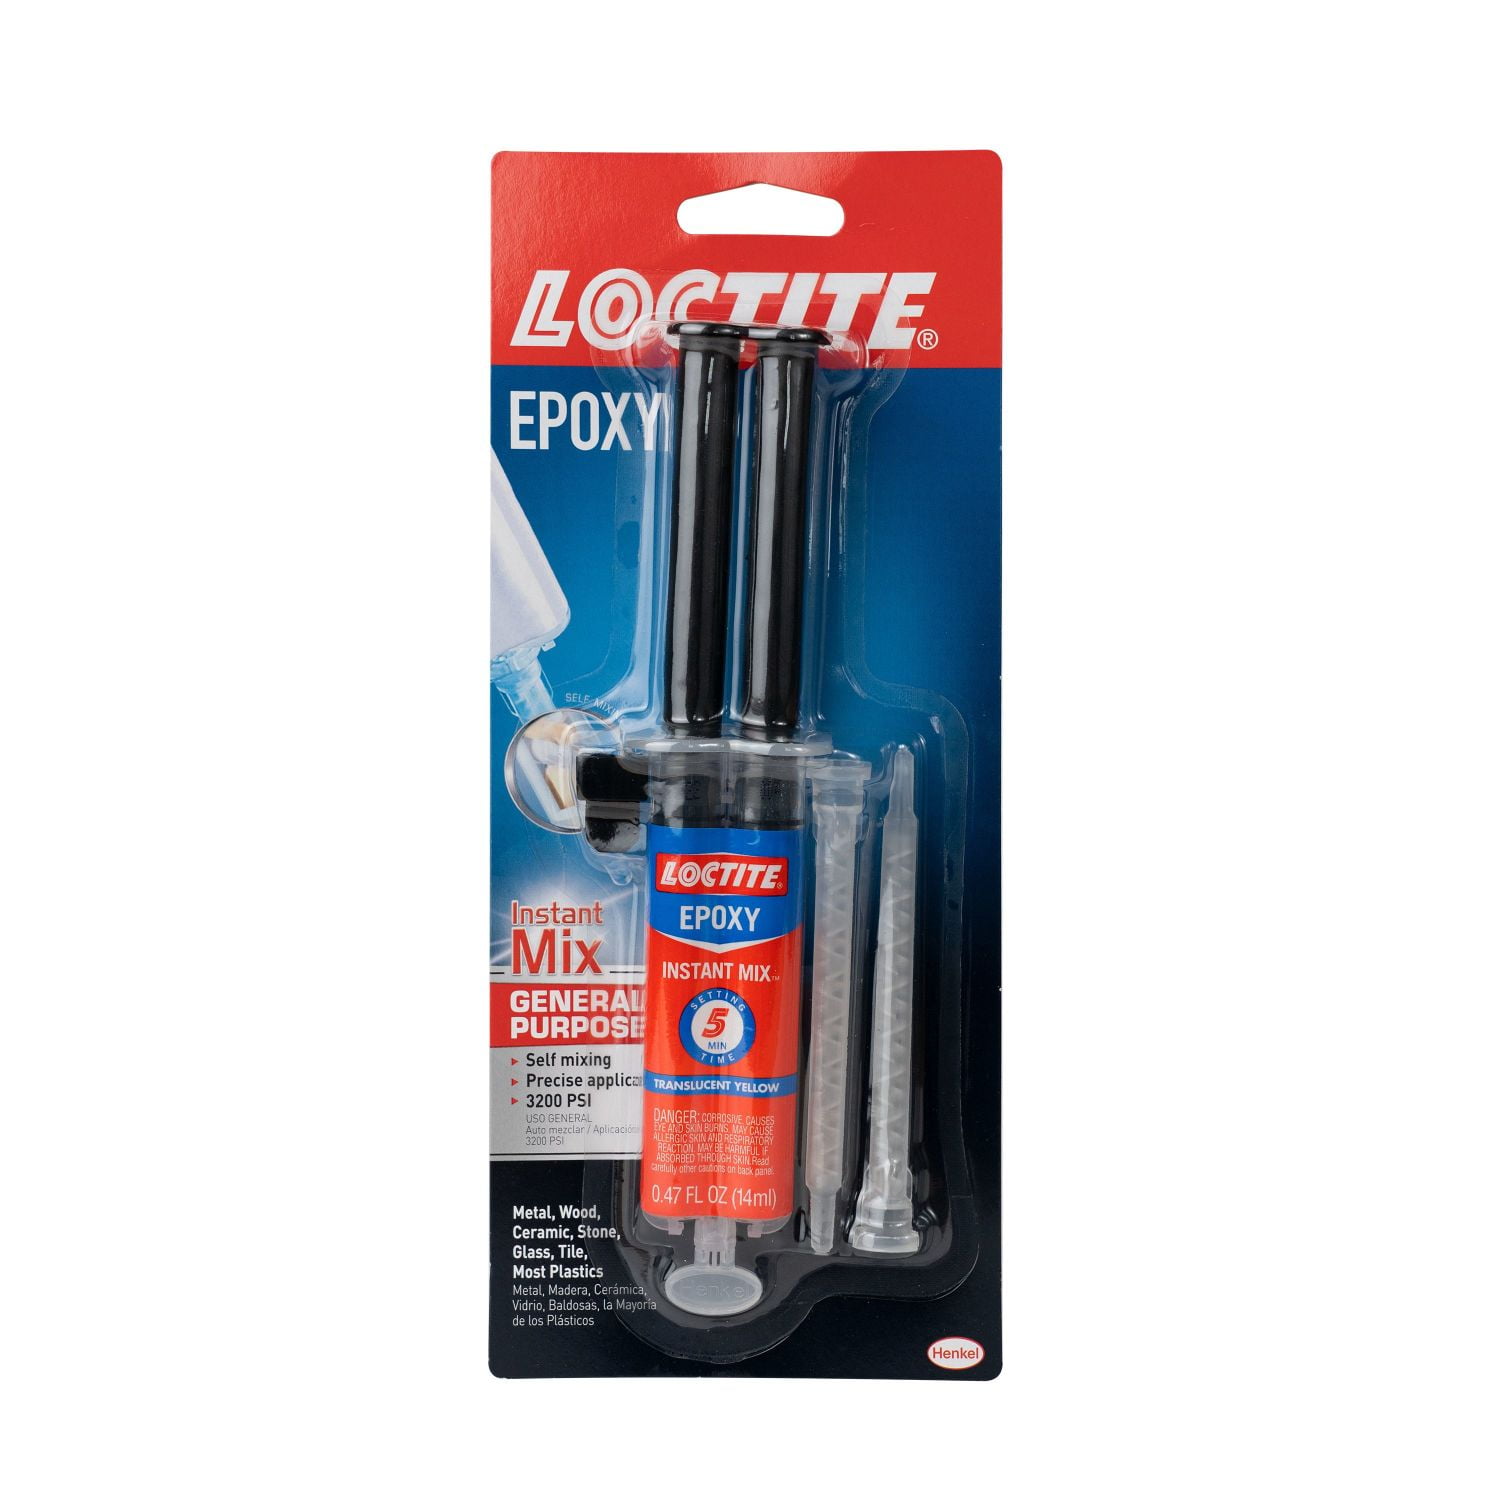 Loctite Epoxy 5 Minutes Instant Mix, Clear 0.47 fl oz Syringe